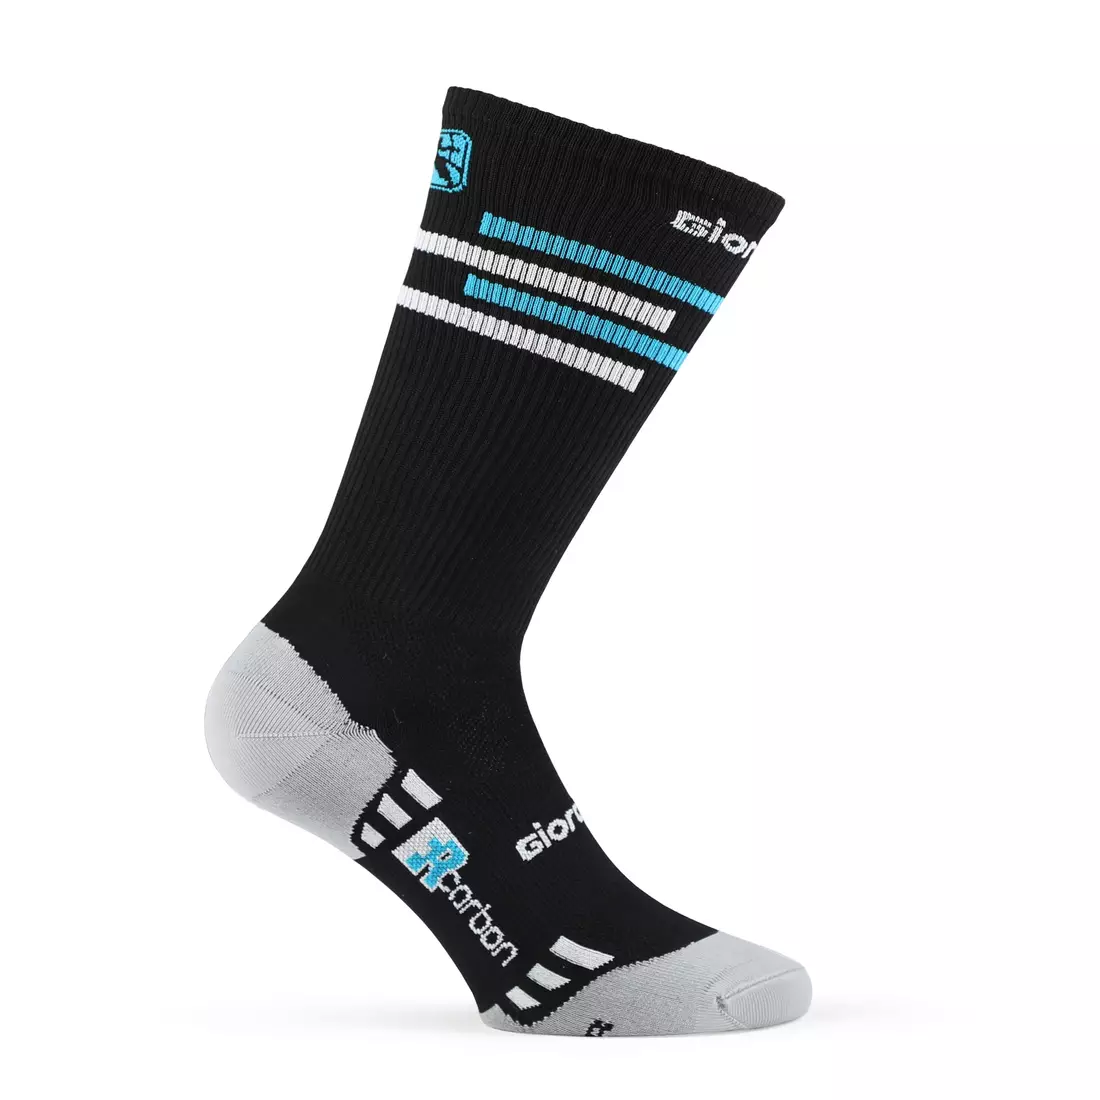 GIORDANA LINES cycling socks, black and blue